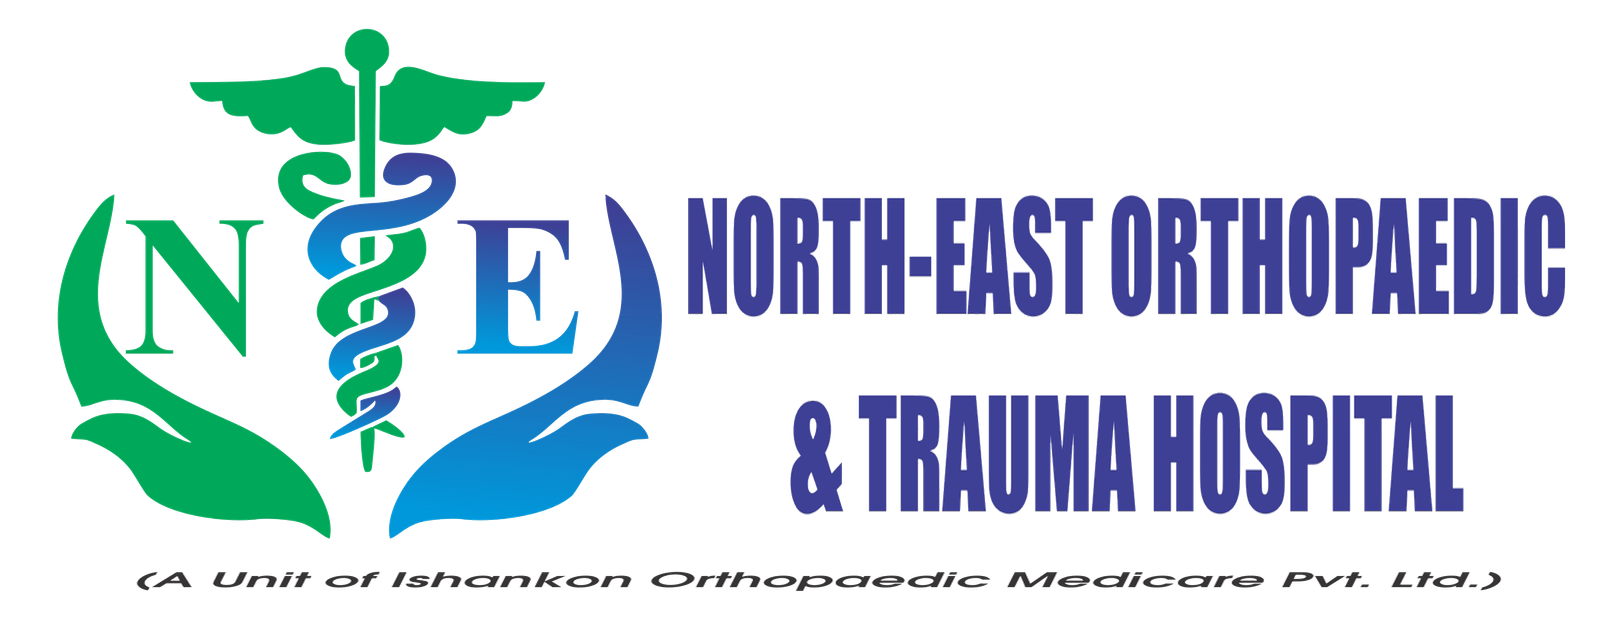 North East Orthopaedic and Trauma Hospital